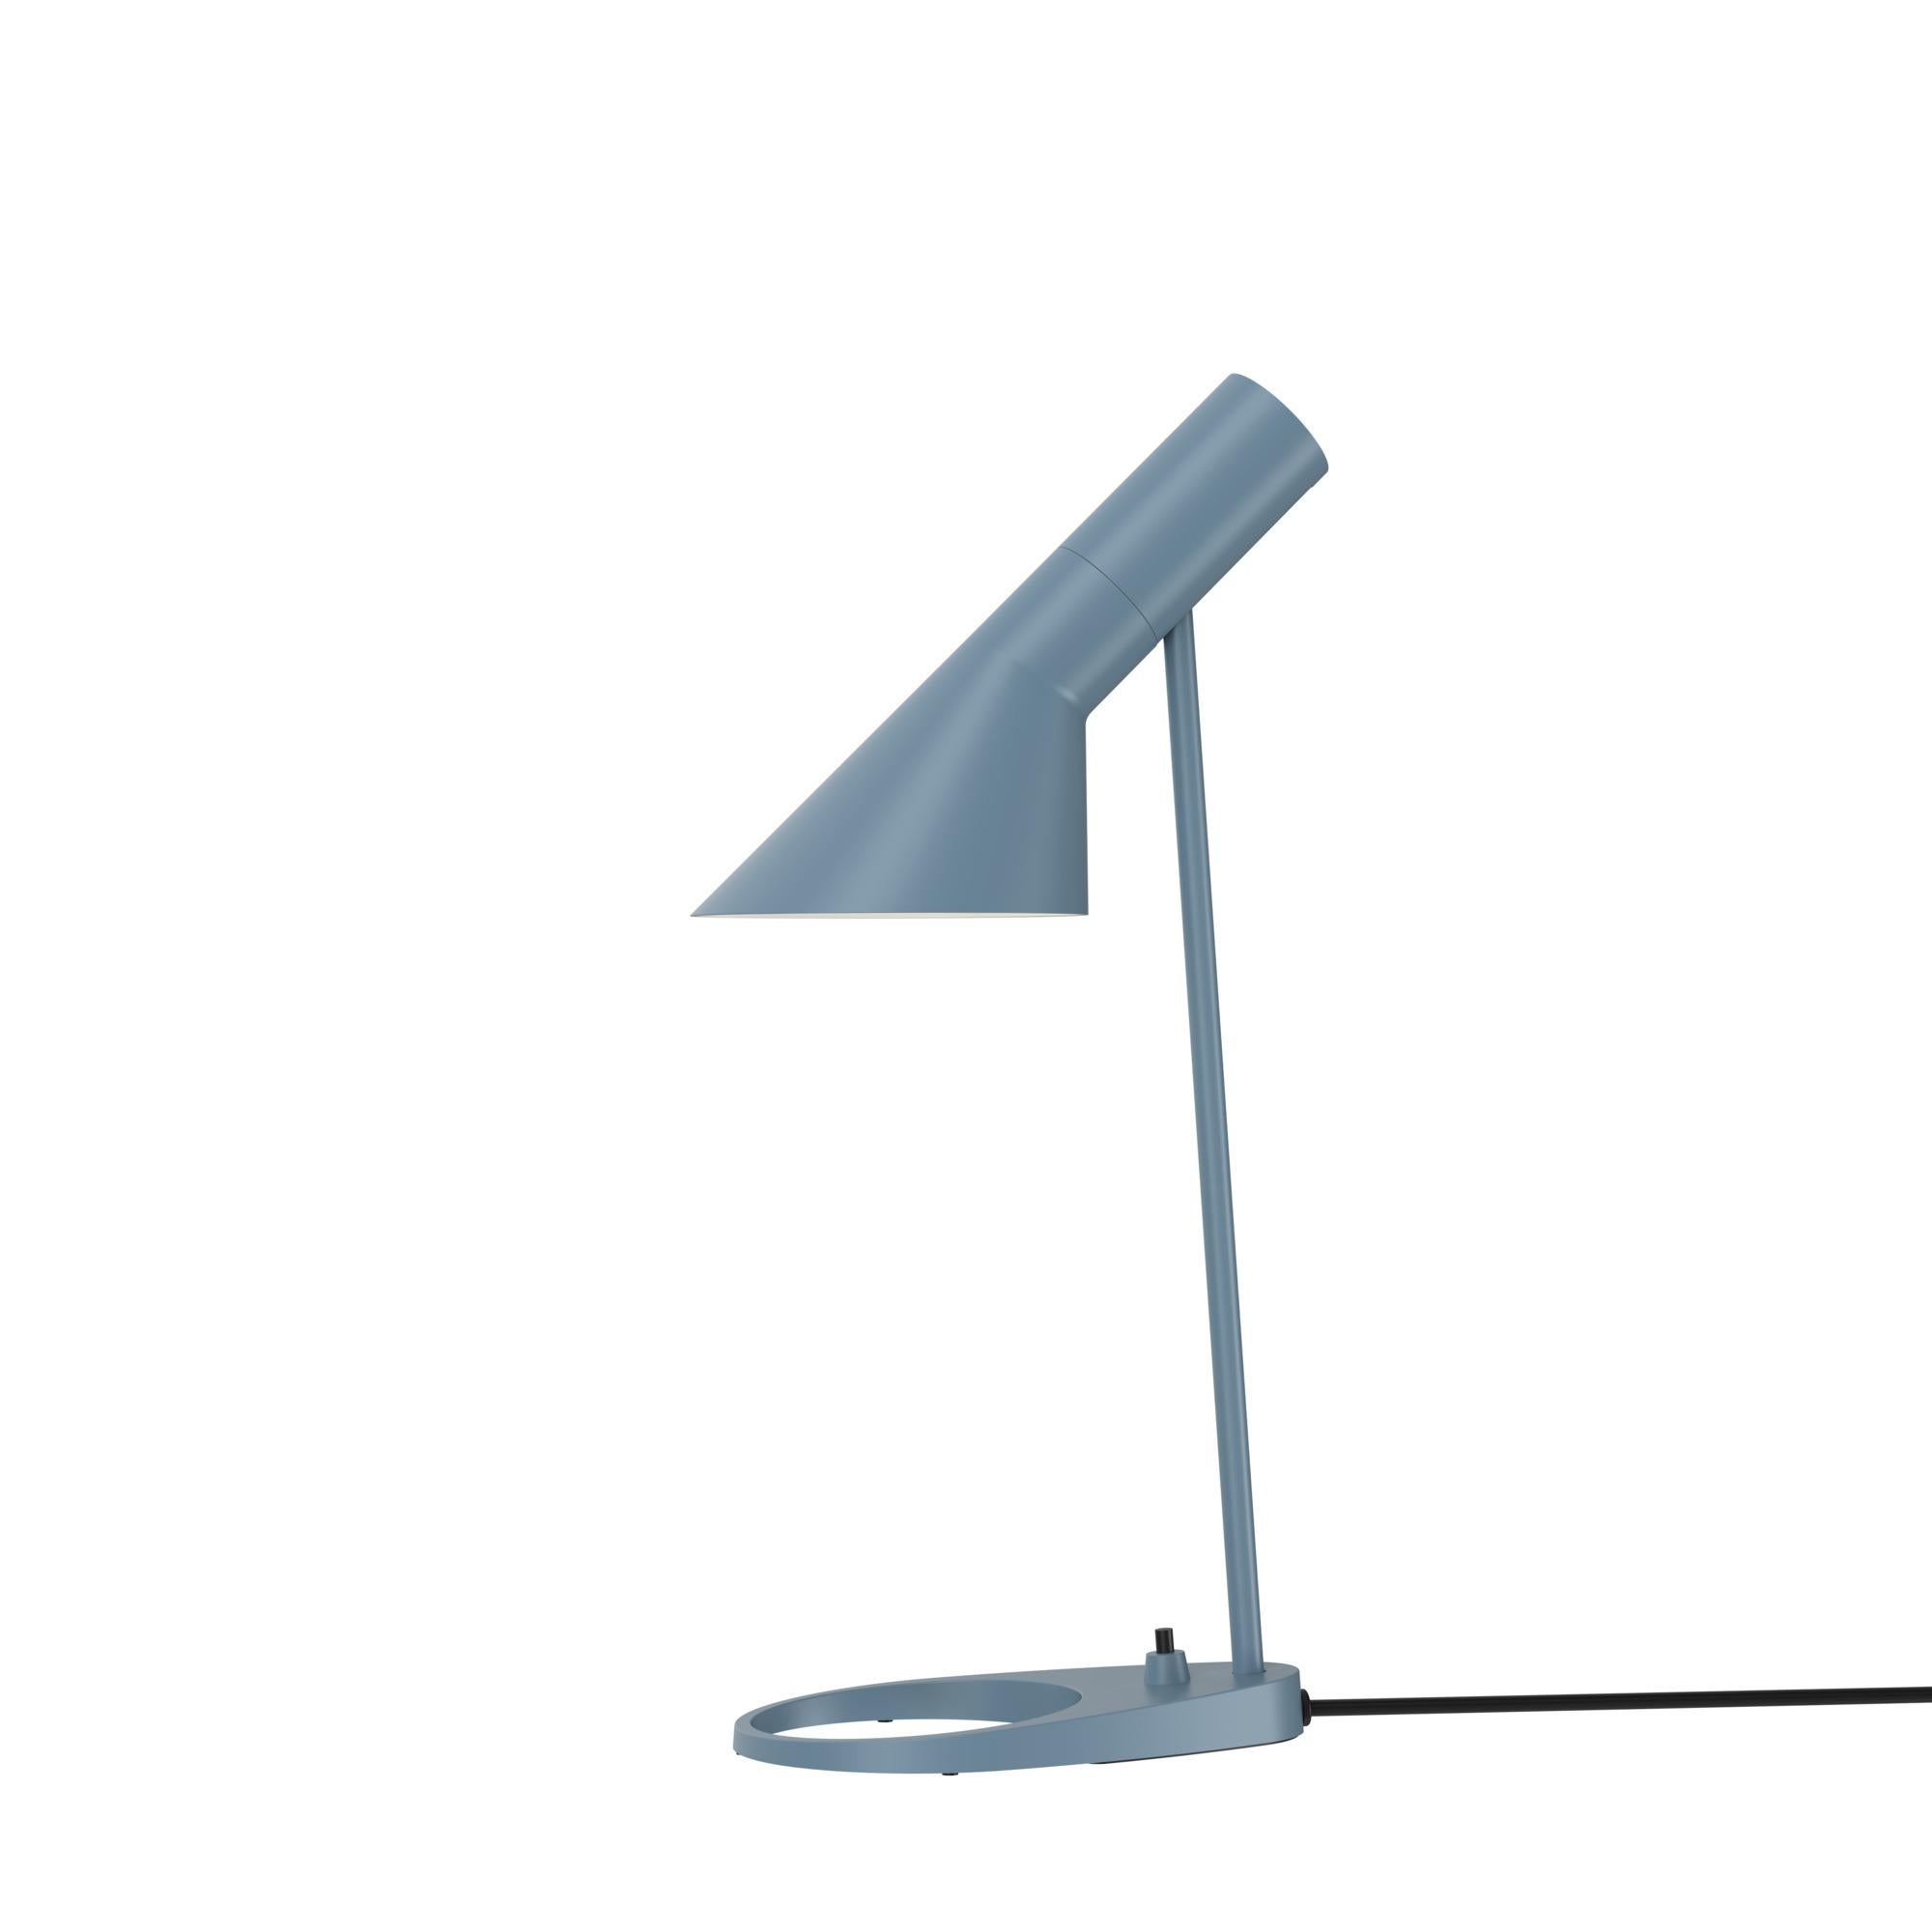 Arne Jacobsen 'Aj Mini' Table Lamp in Electric Orange for Louis Poulsen For Sale 4